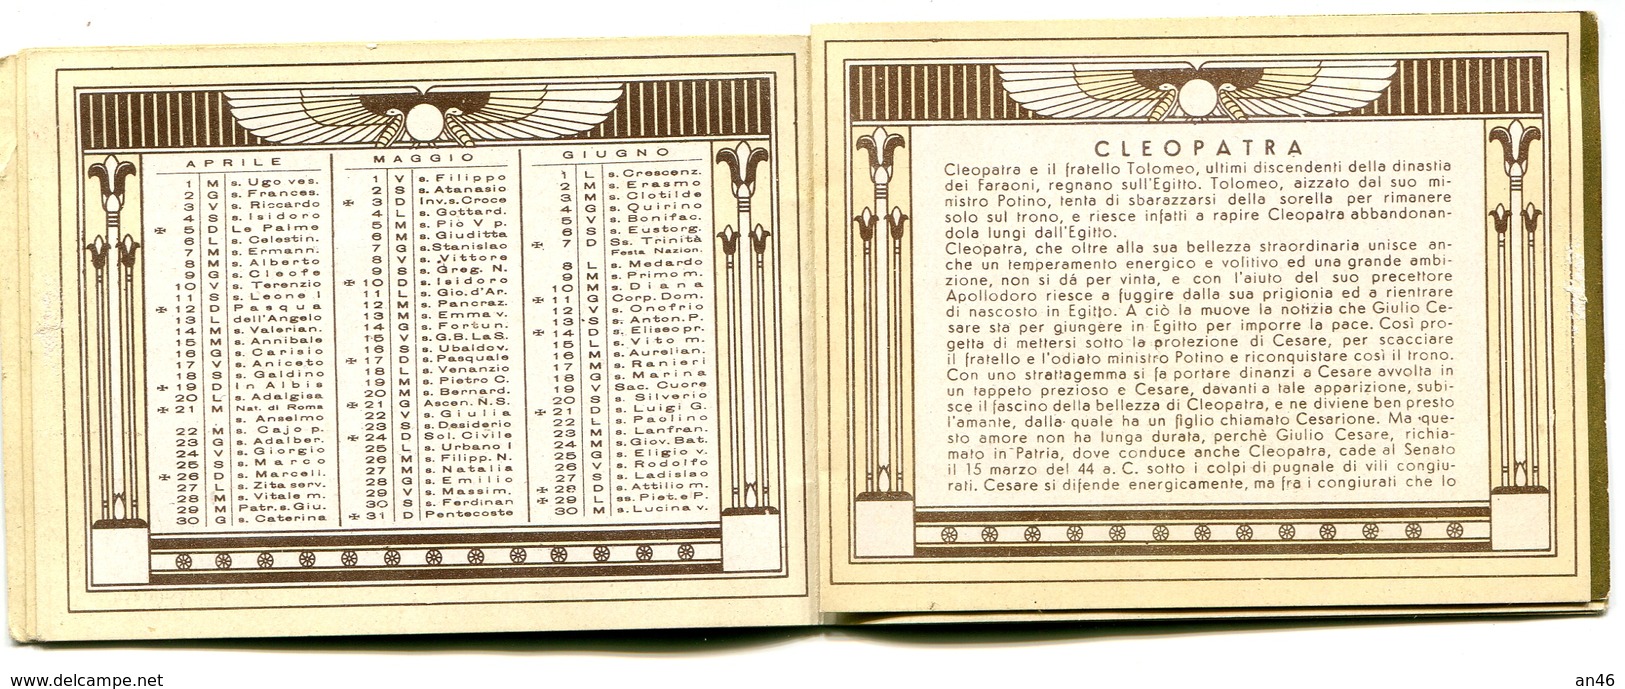 Calendario-Calendarietto-Calendrier-Kalender-Calendar-1936 "CLEOPATRA"Completo- Integro E Originale 100% - Formato Grande : 1921-40